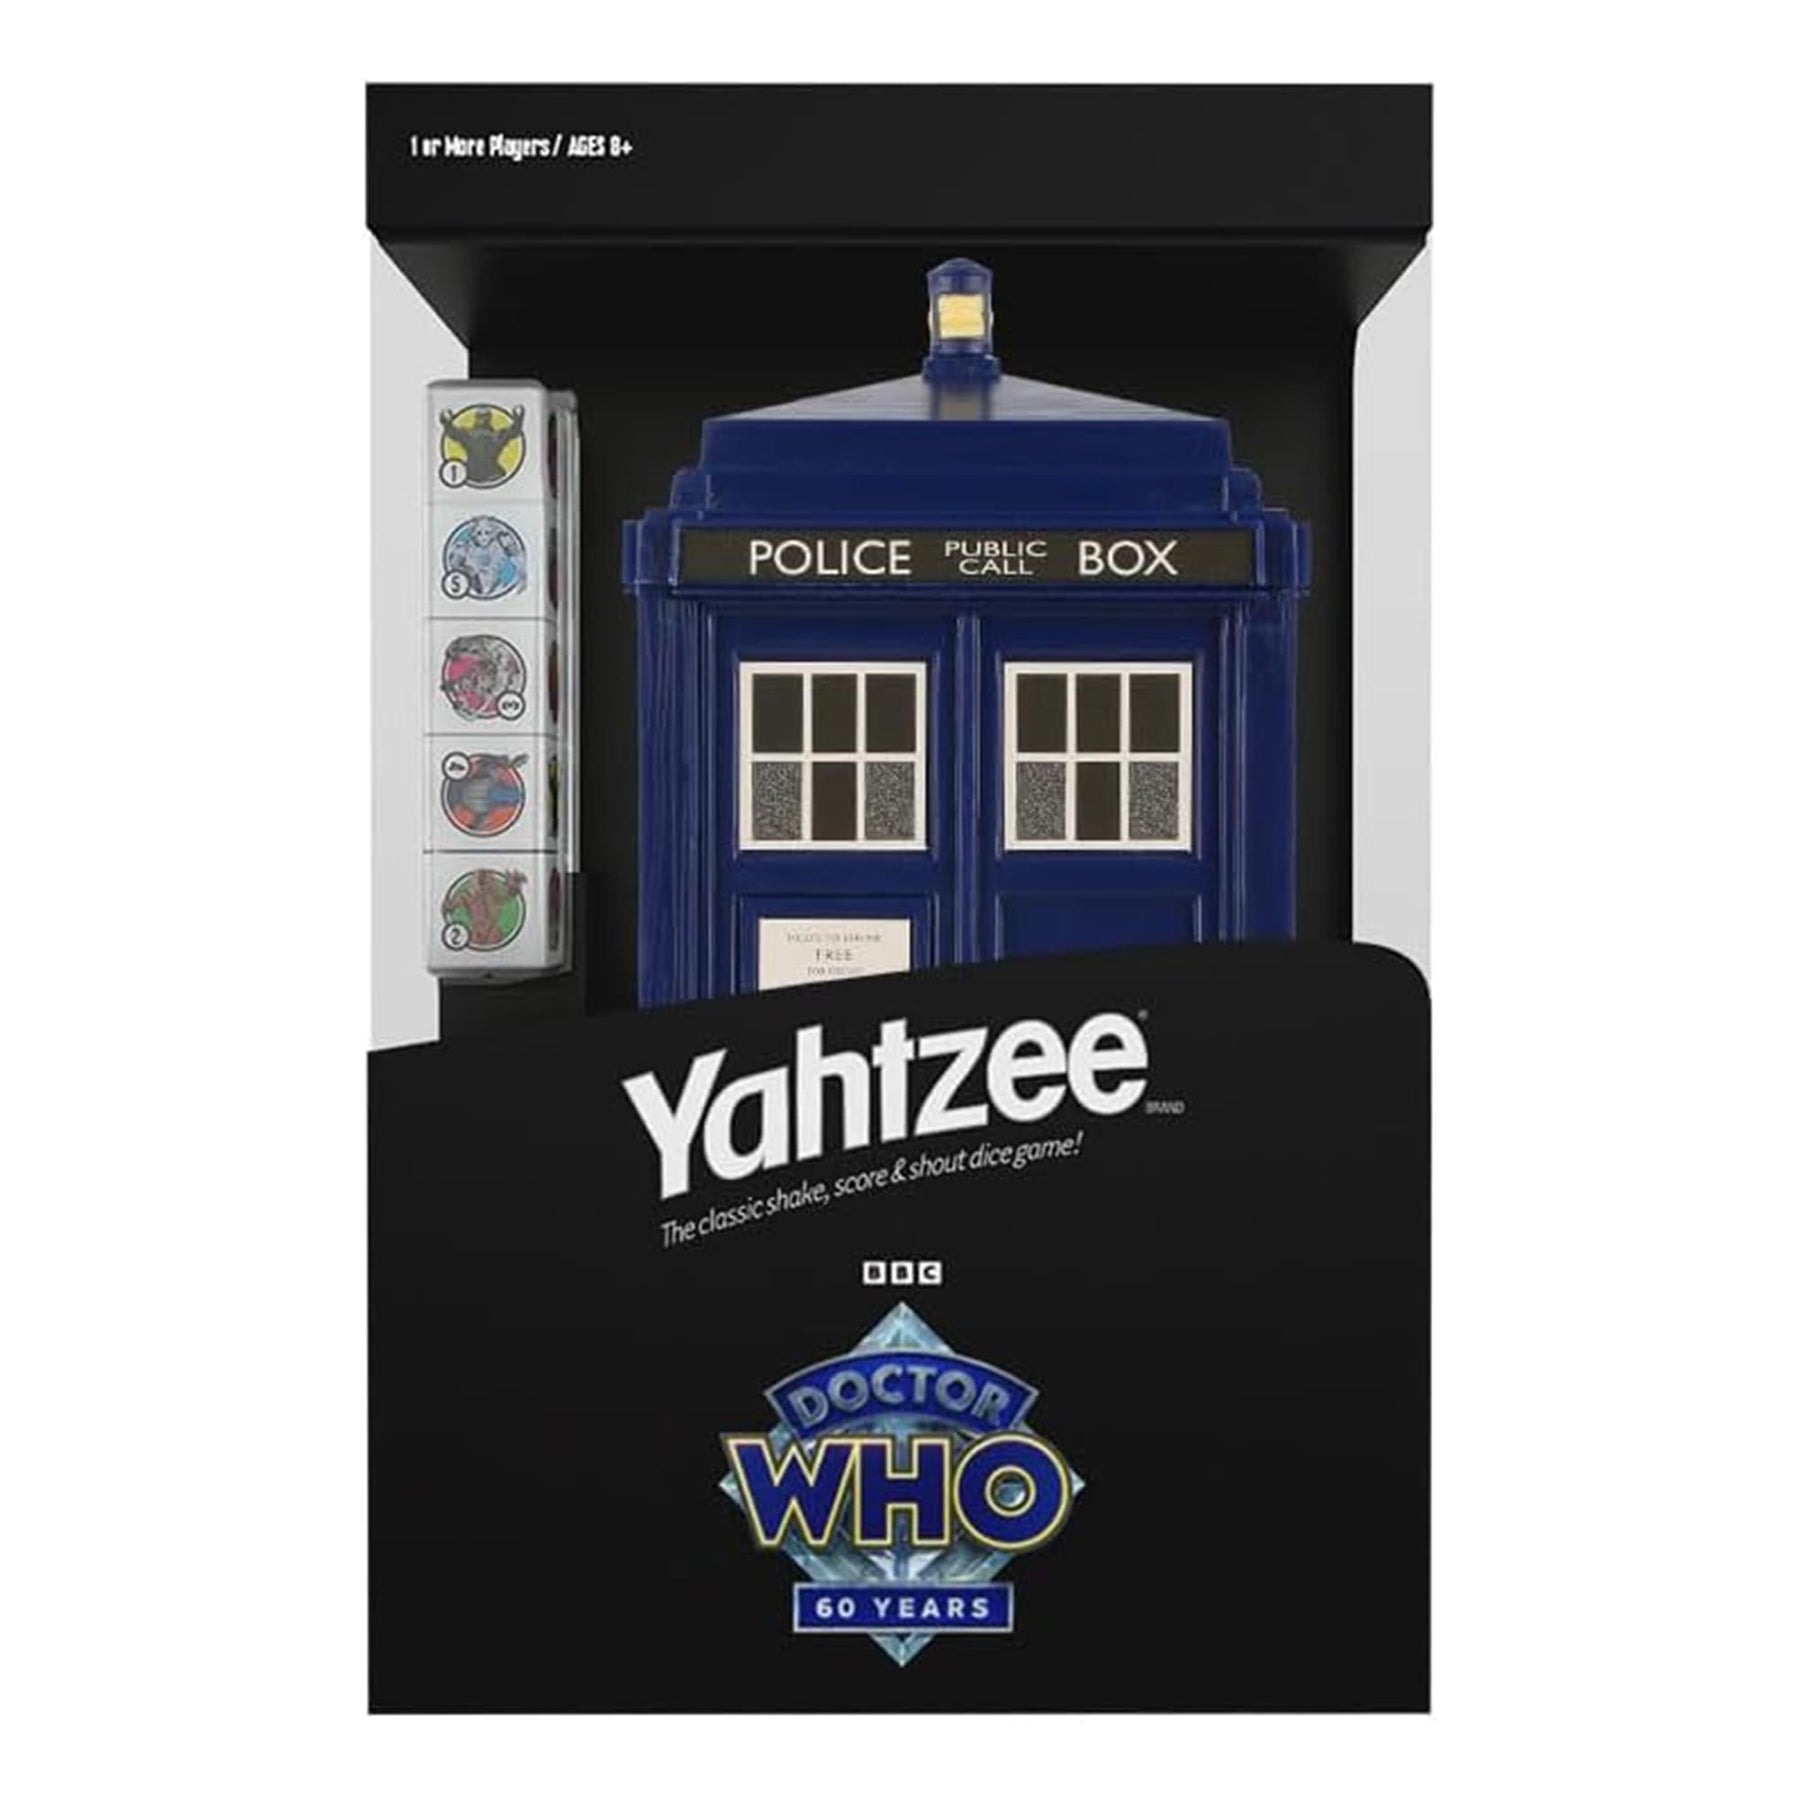 Doctor Who Tardis 60th Anniversary Yahtzee Dice Game